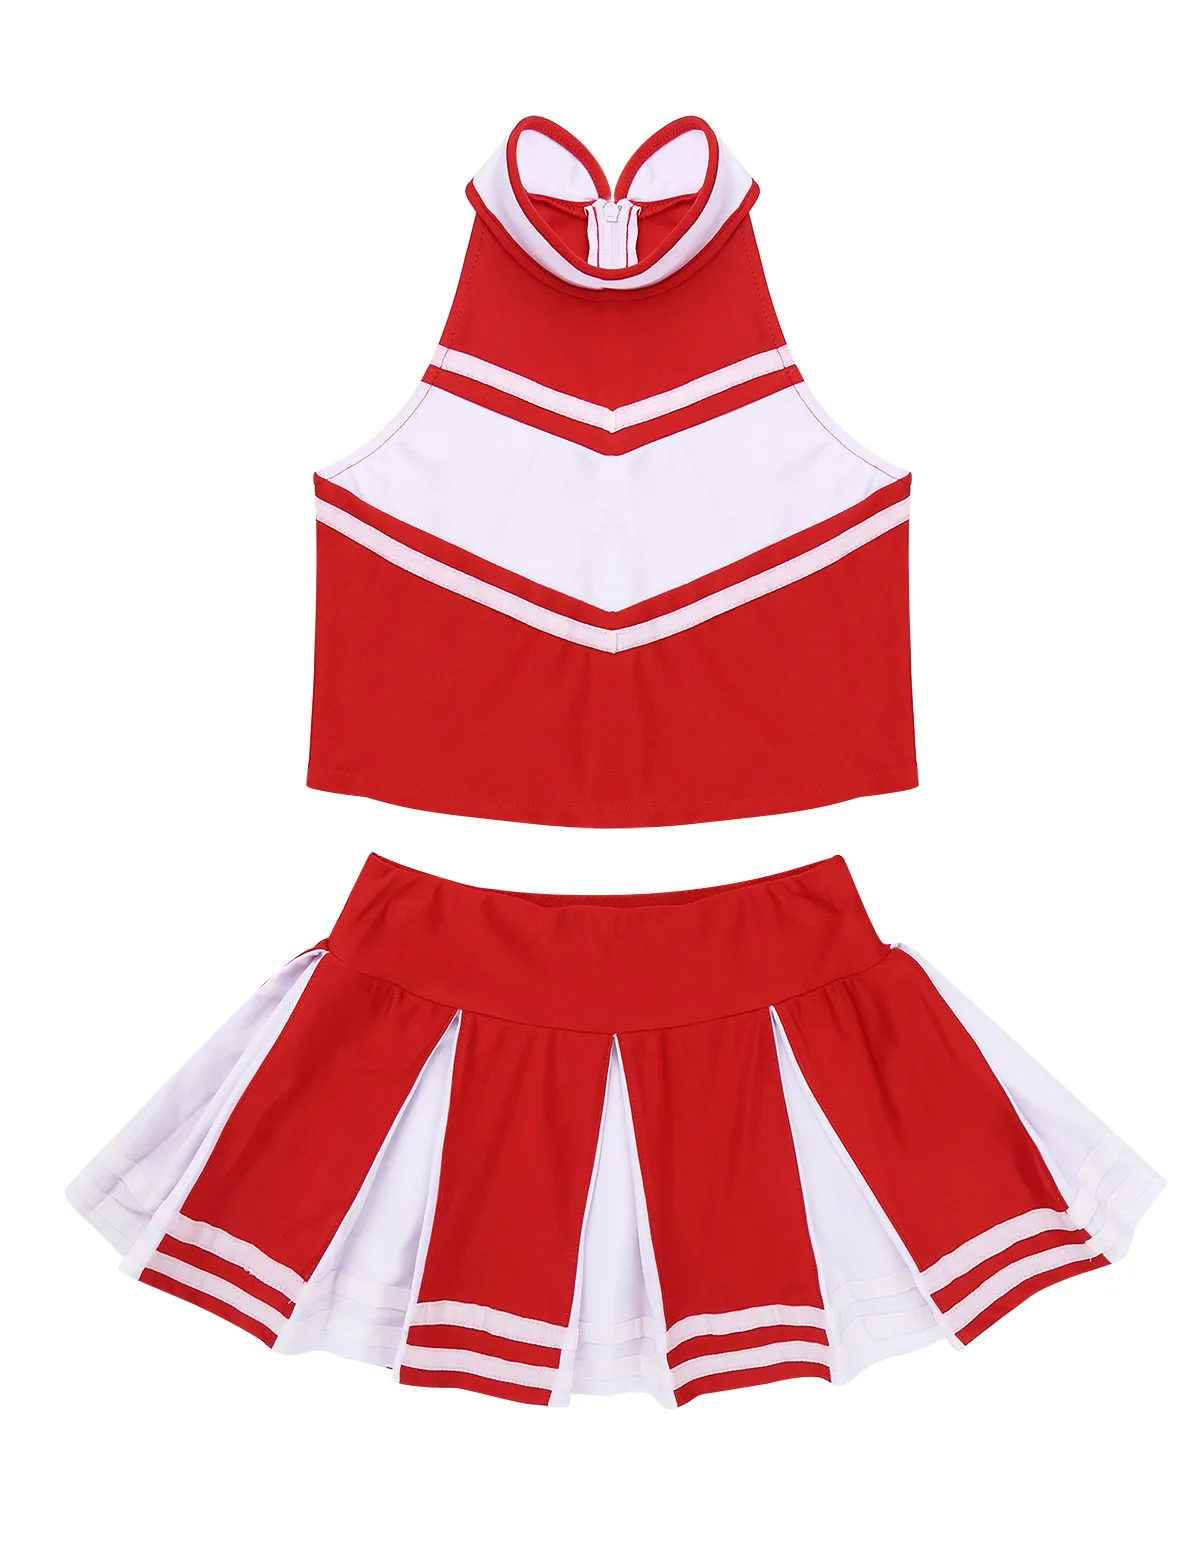 Girls Cheerleader Costume Outfits Sleeveless Tops+Pleated Skirt Performance Set 